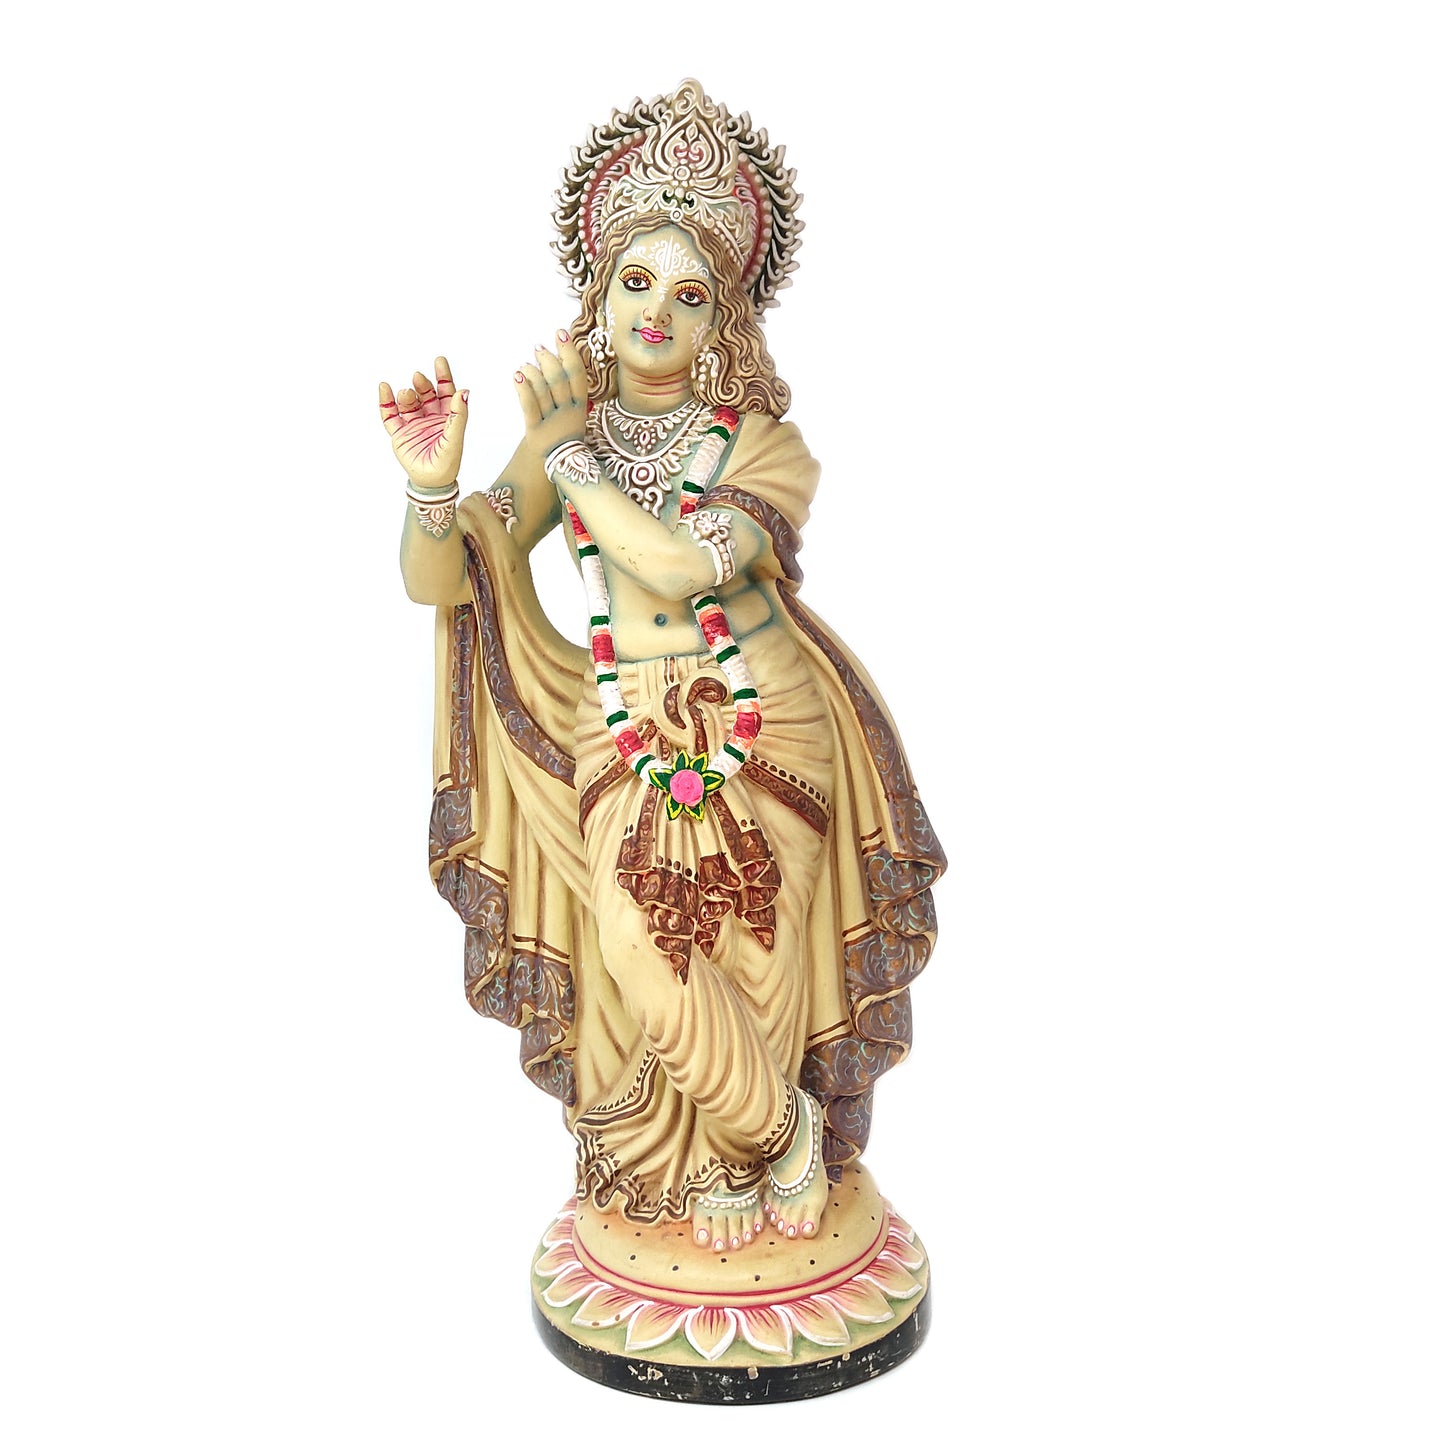 Terracotta Krishna India God Handmade Sculpture Figurine Clay Statue 